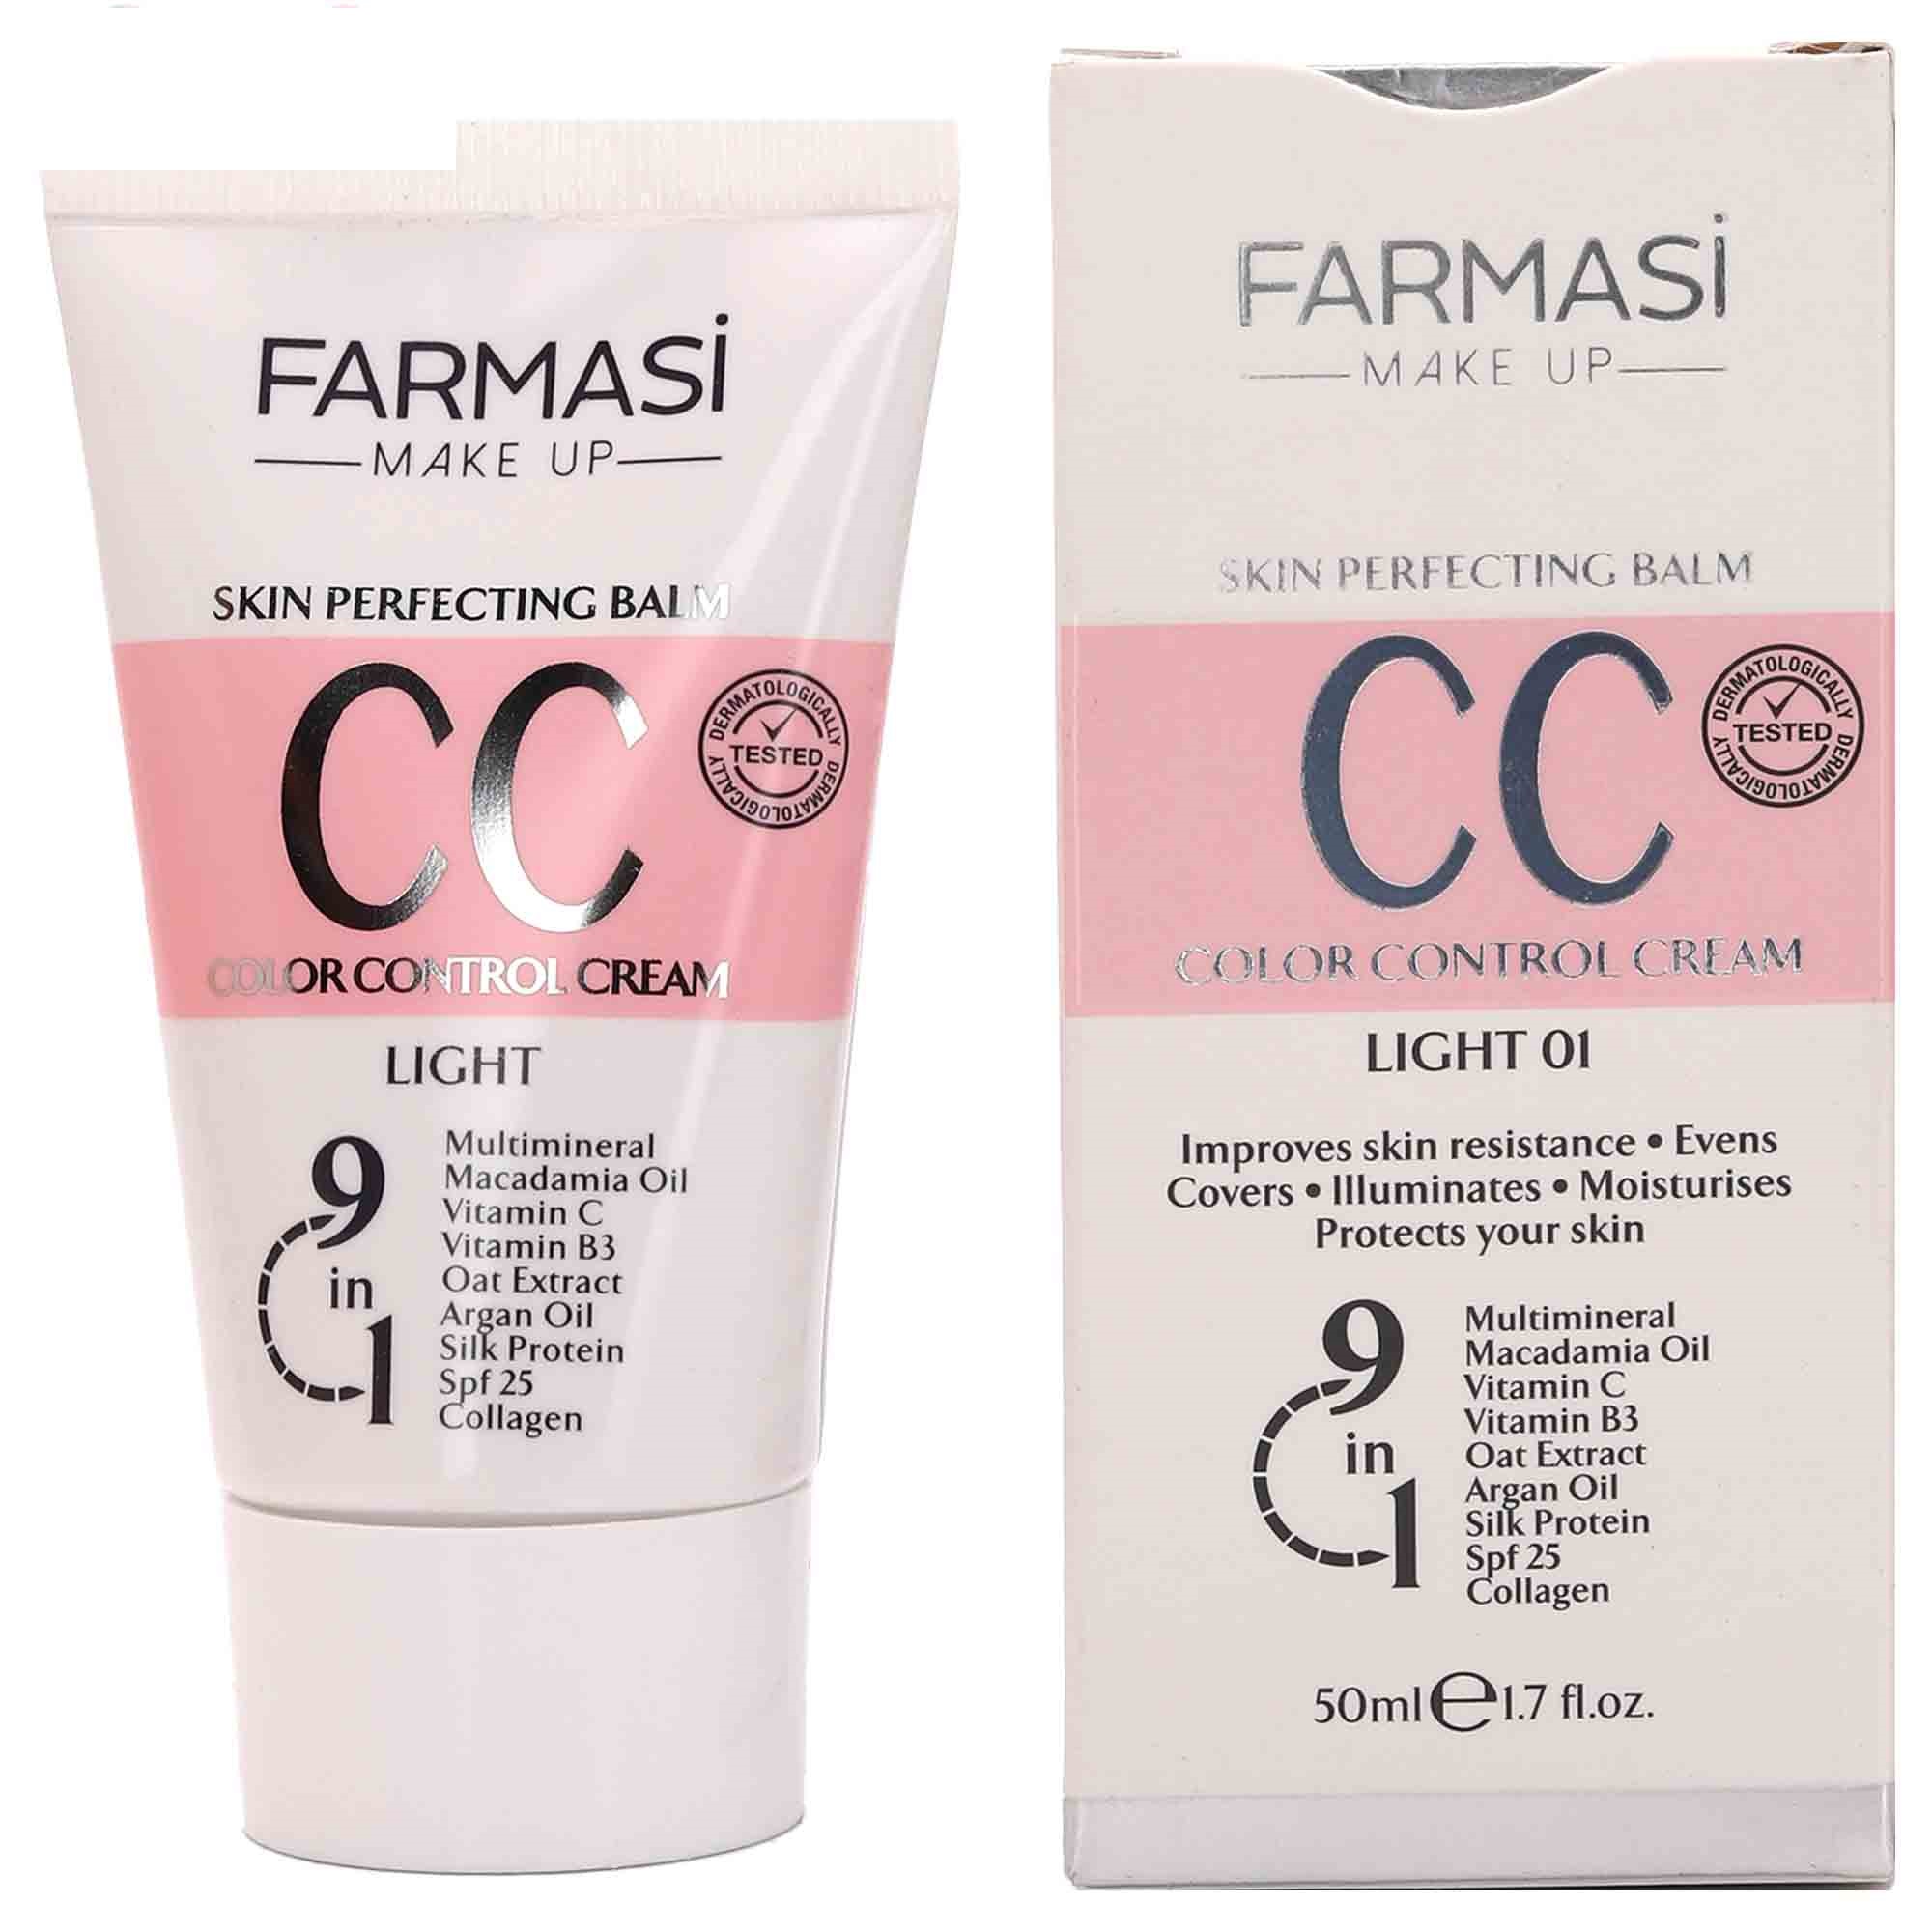 CC Pharmacy Cream No. 01 Volume 50 ml - Farmasi